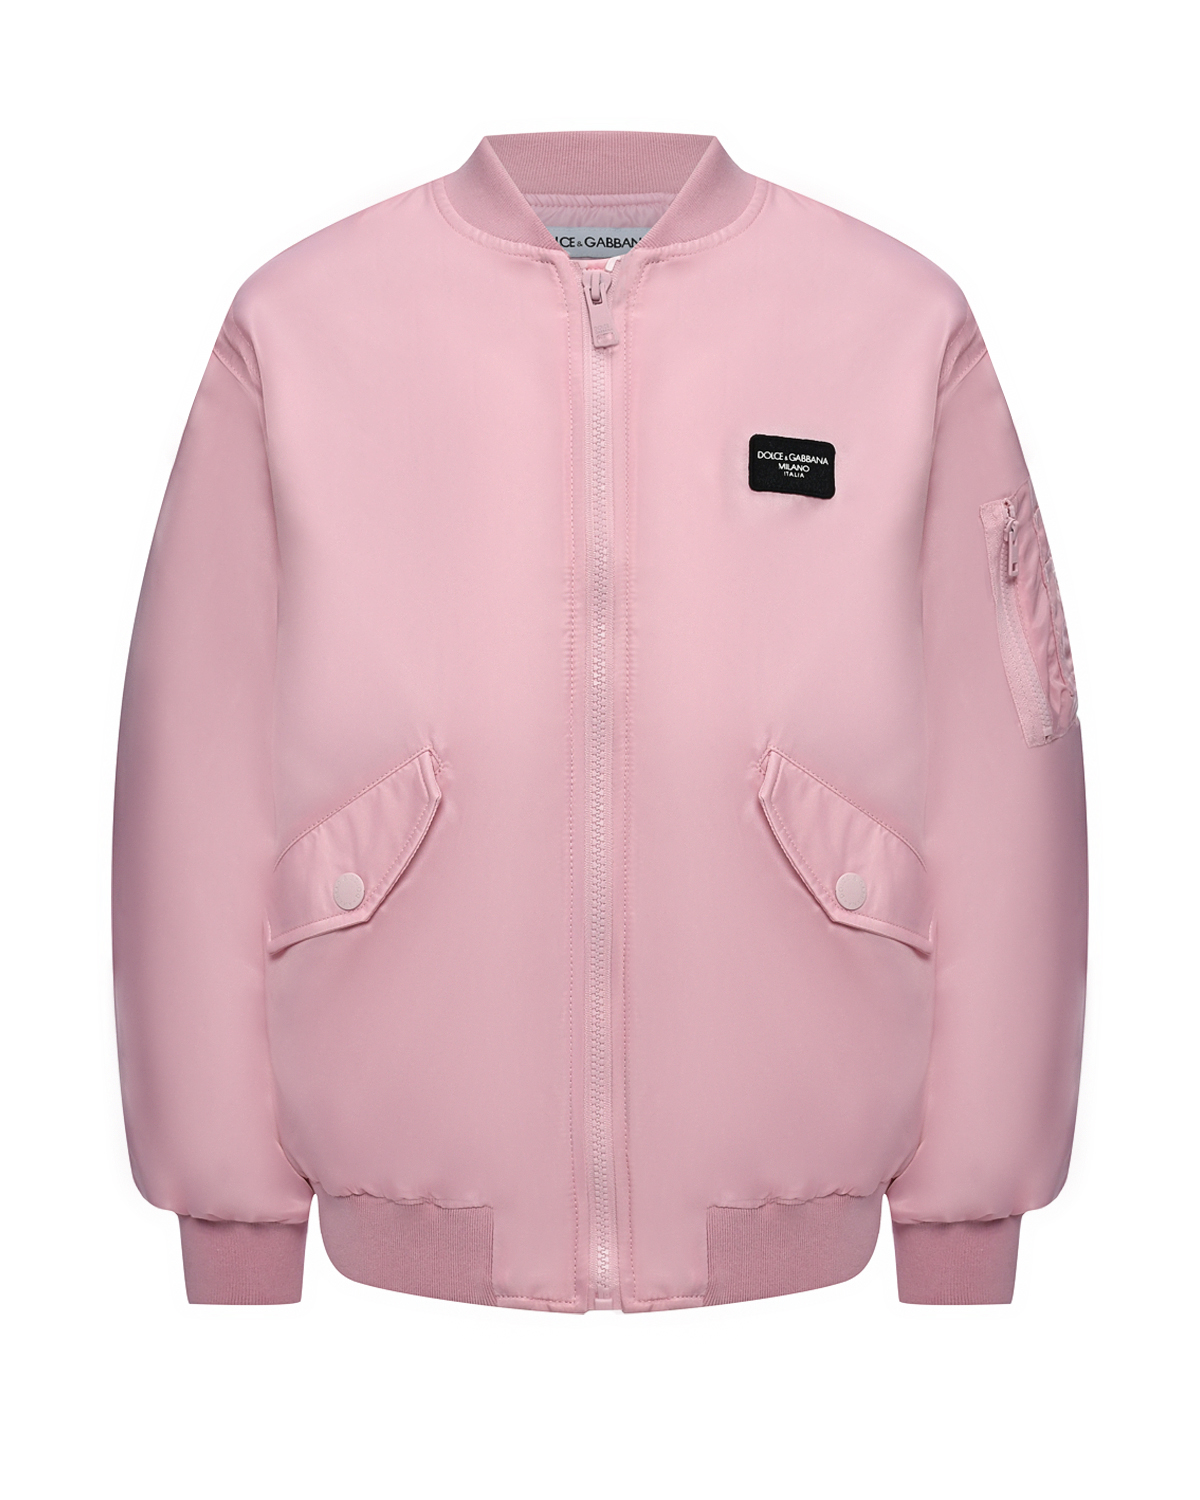 Куртка-бомбер, розовая Dolce&Gabbana, размер 140, цвет розовый - фото 1